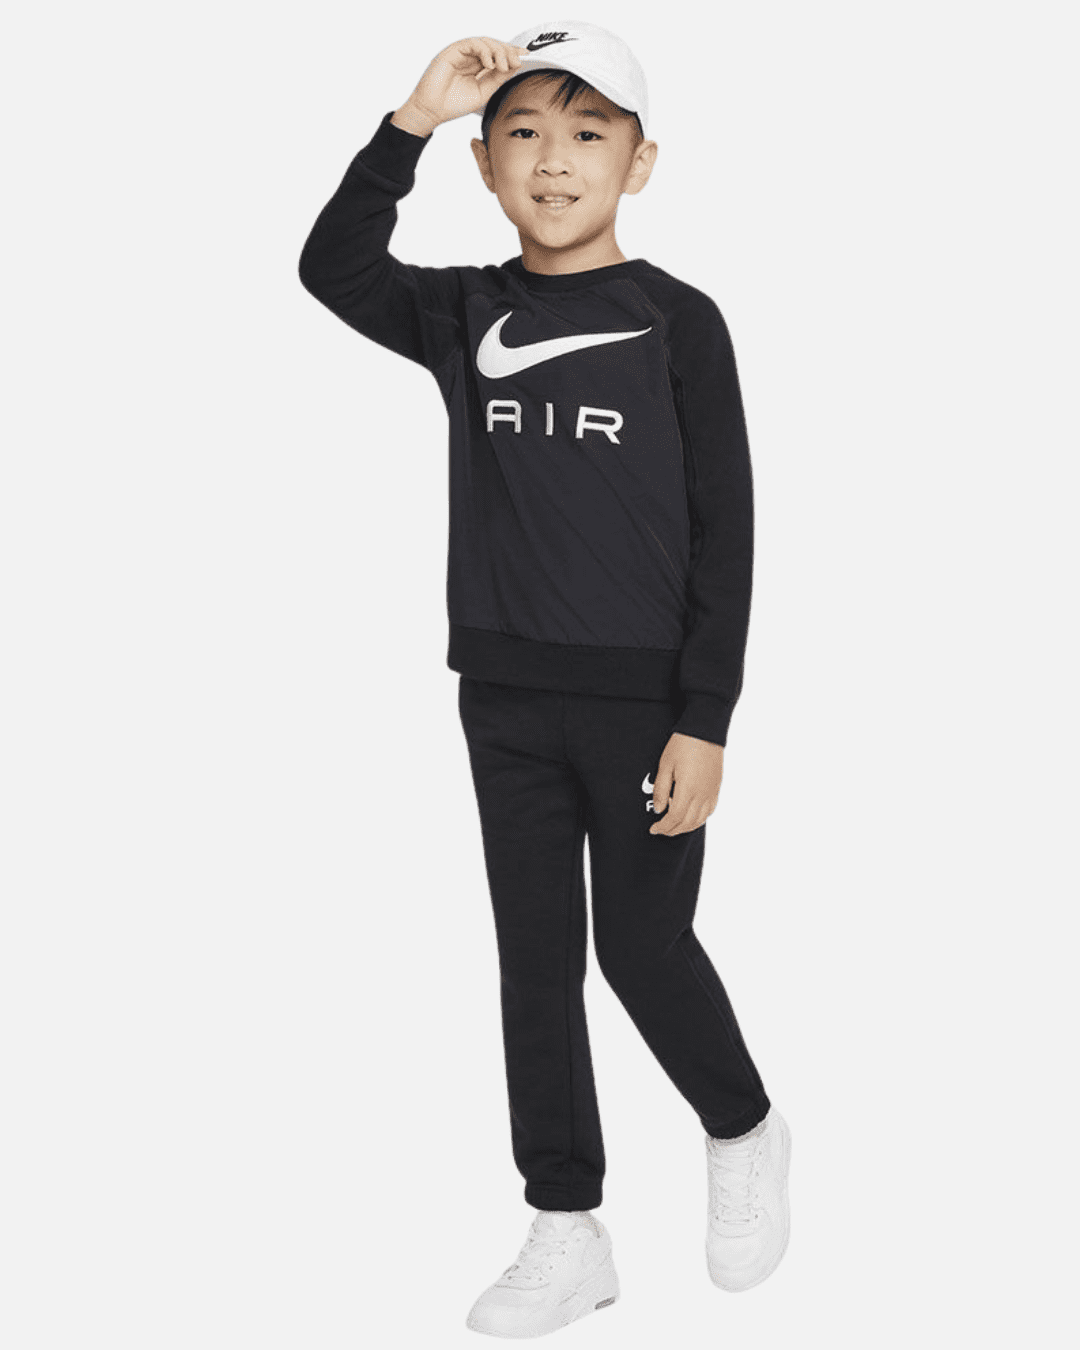 Nike Air Crew Kids Sportswear Set - Black